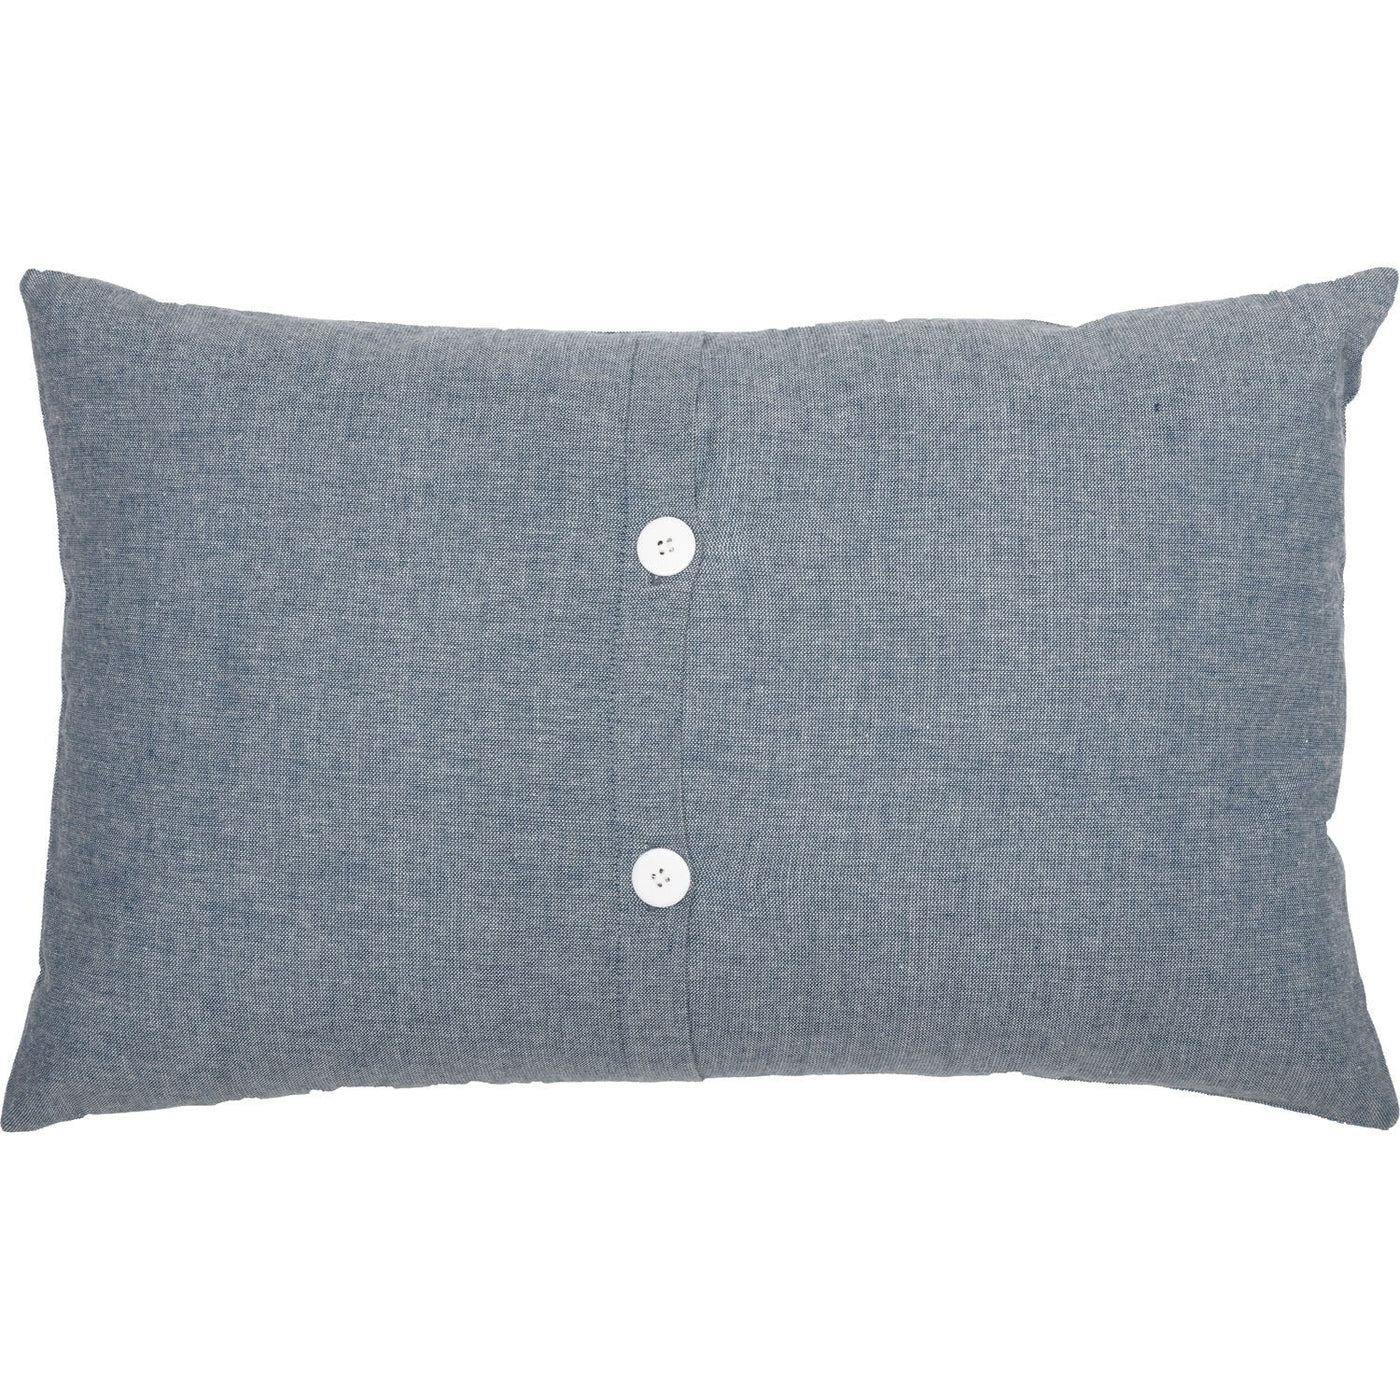 Kiraly Utca I 14 x 22 Pillow - Blue